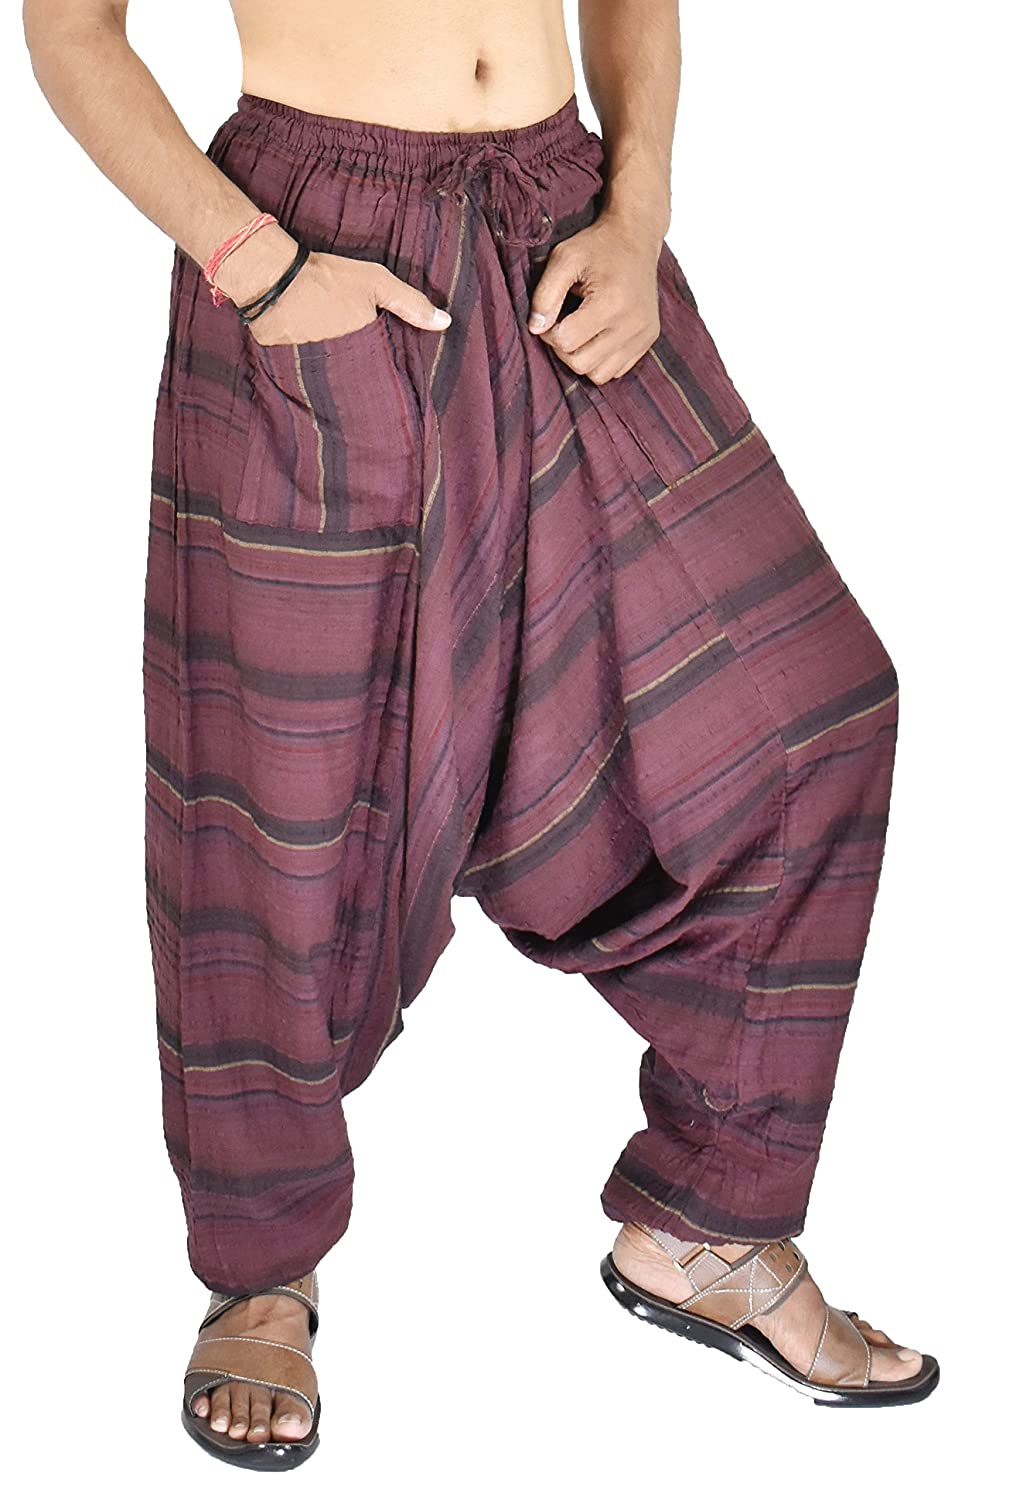 Unisex handmade patchwork boho hippie aladdin harem yoga pants one size  women  eBay